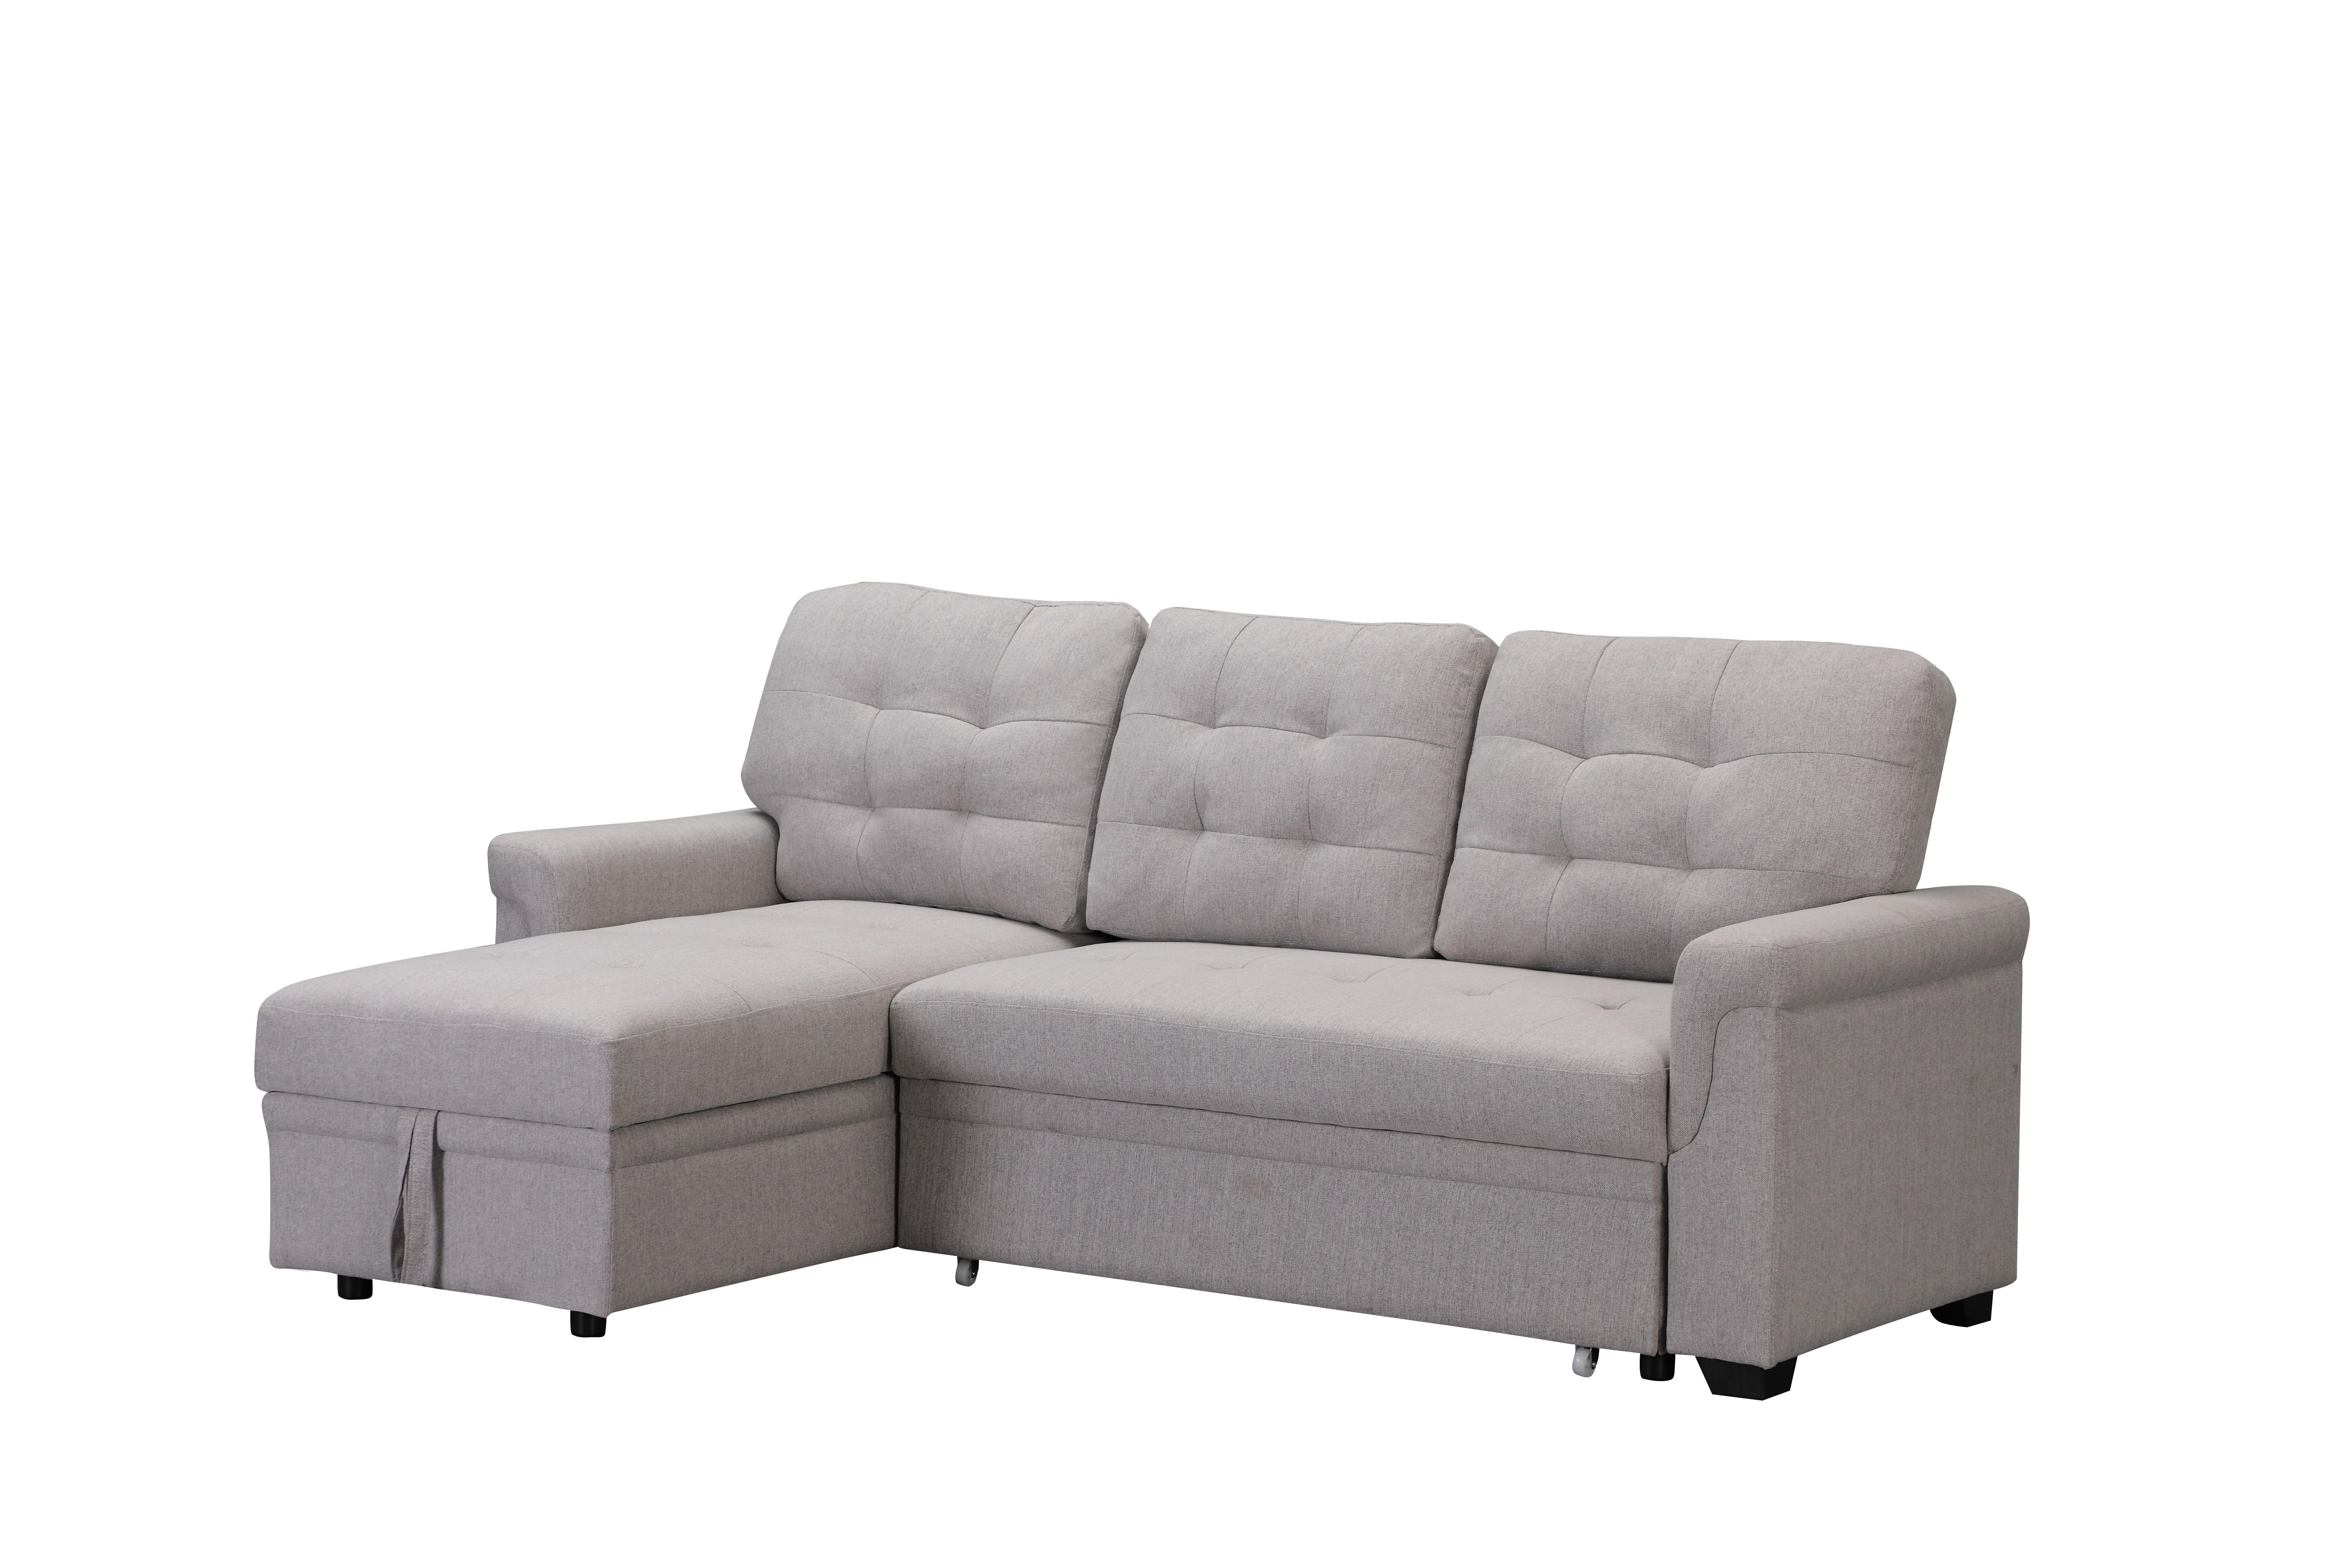 150 cm width sofa beds